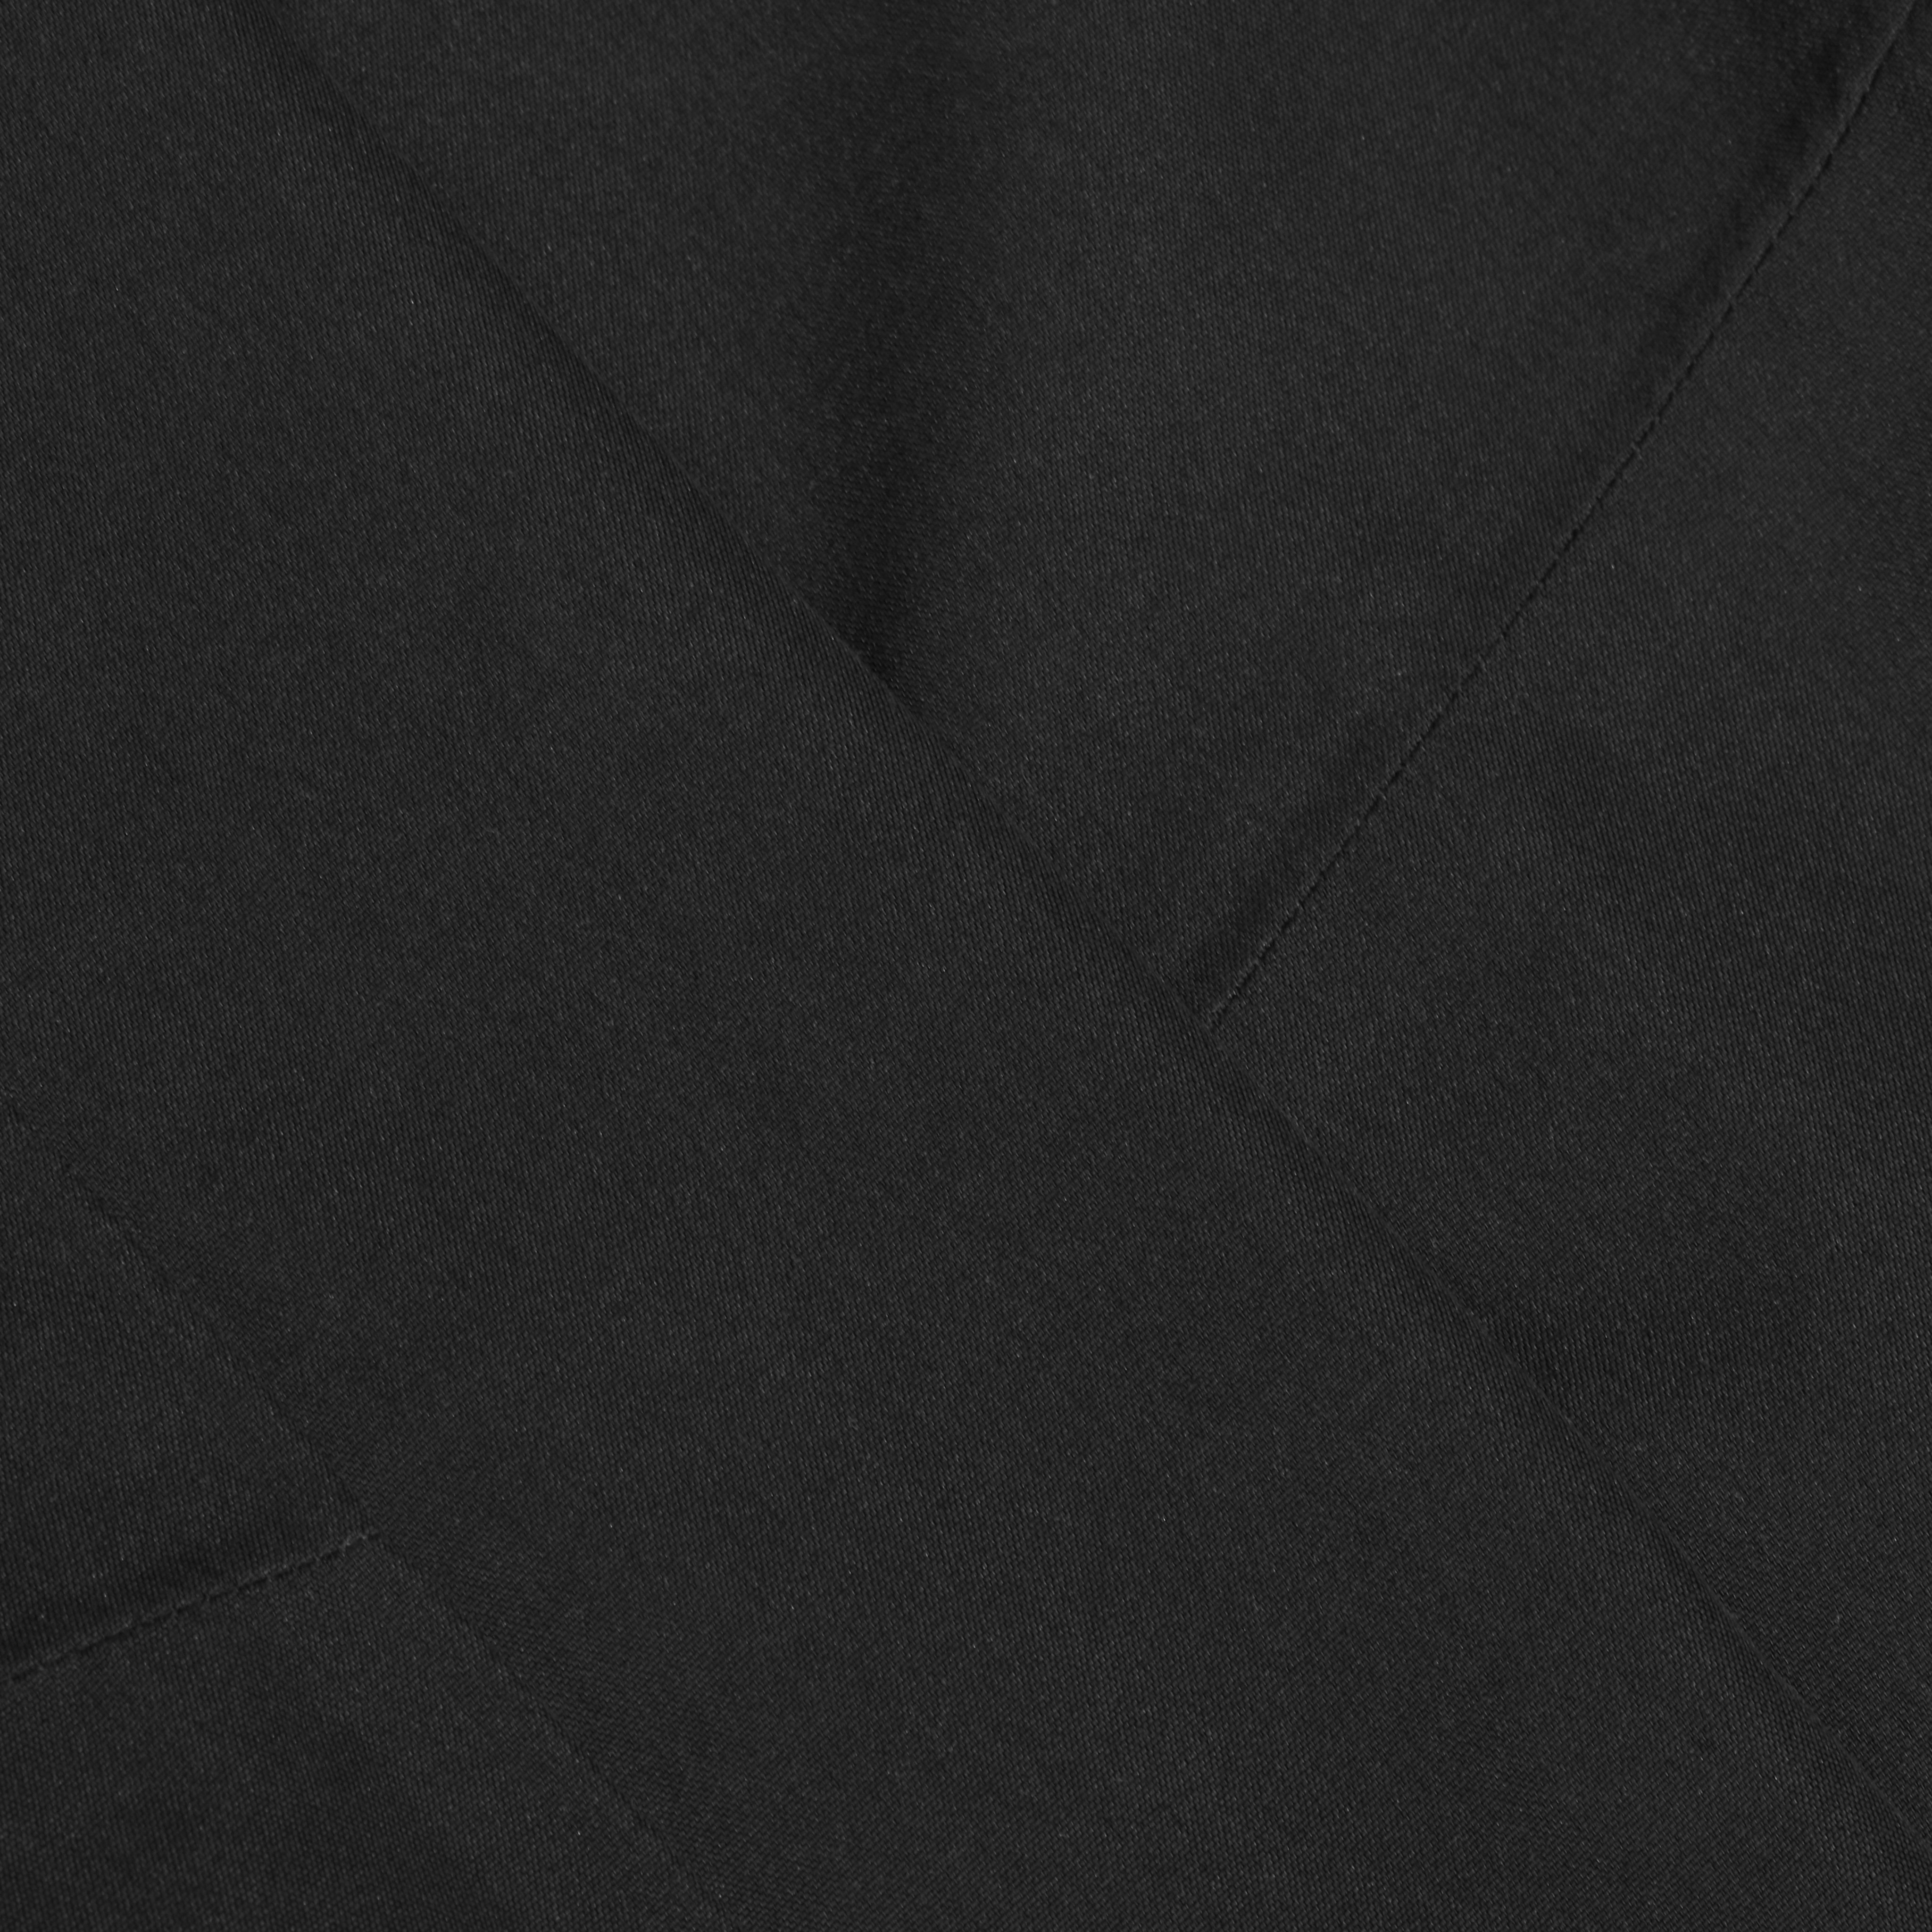 Trovat 3 in 1 HS Hooded Jacket Women product image